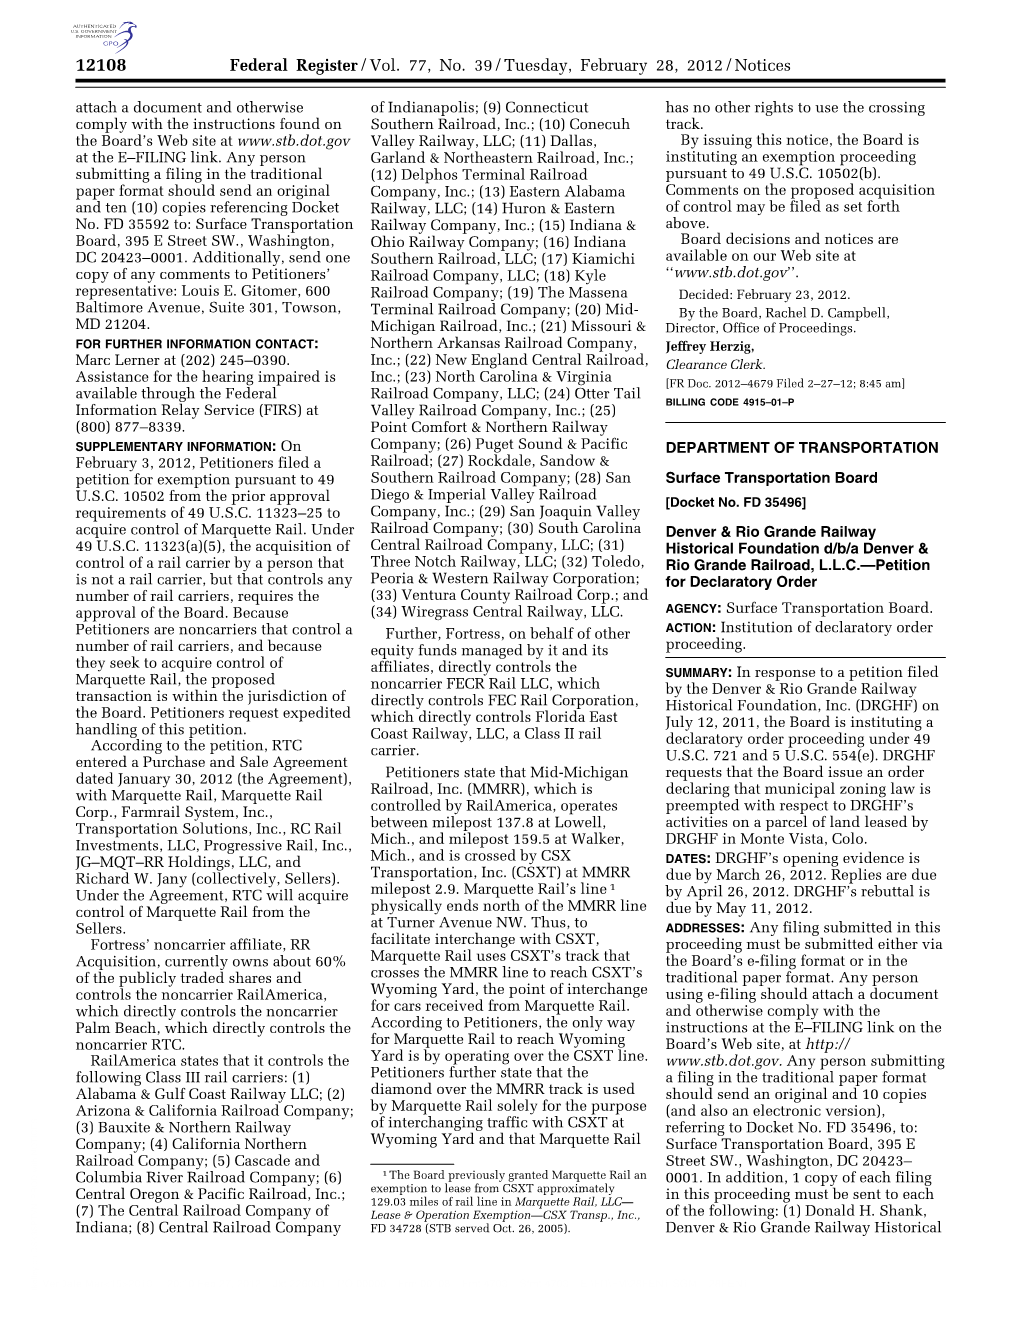 Federal Register/Vol. 77, No. 39/Tuesday, February 28, 2012/Notices